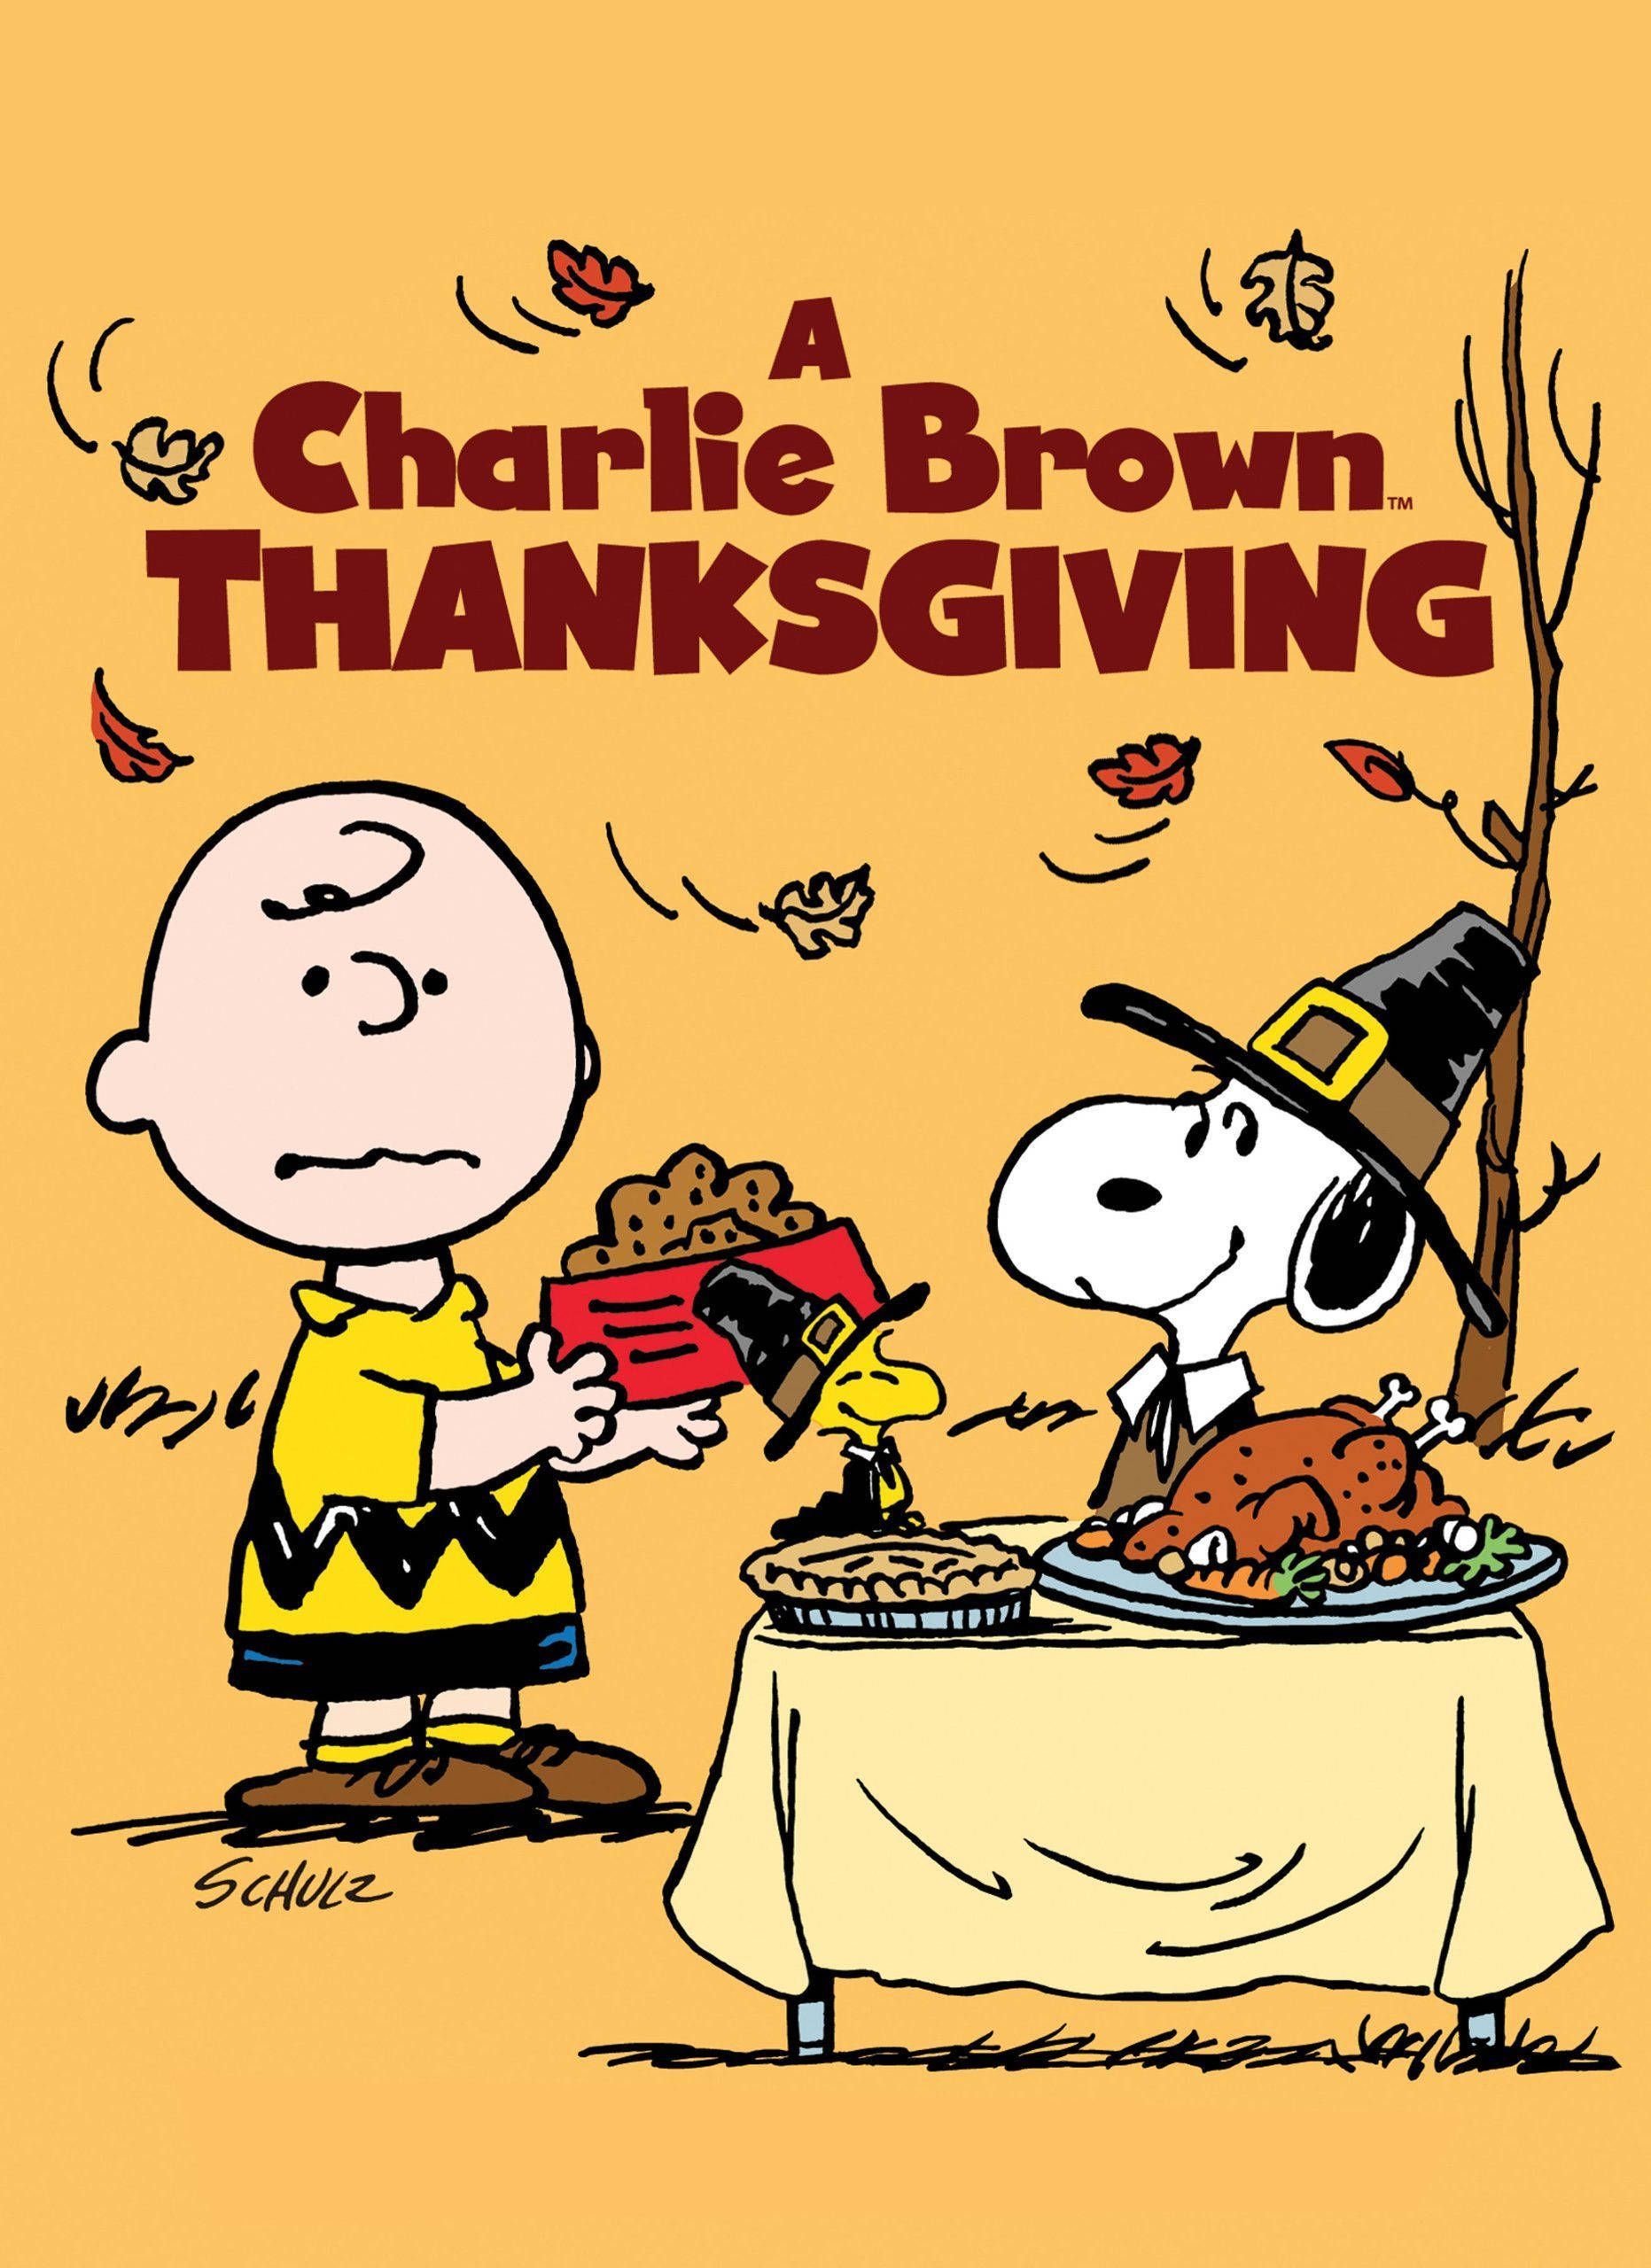 Download Charlie Brown Thanksgiving Wallpaper